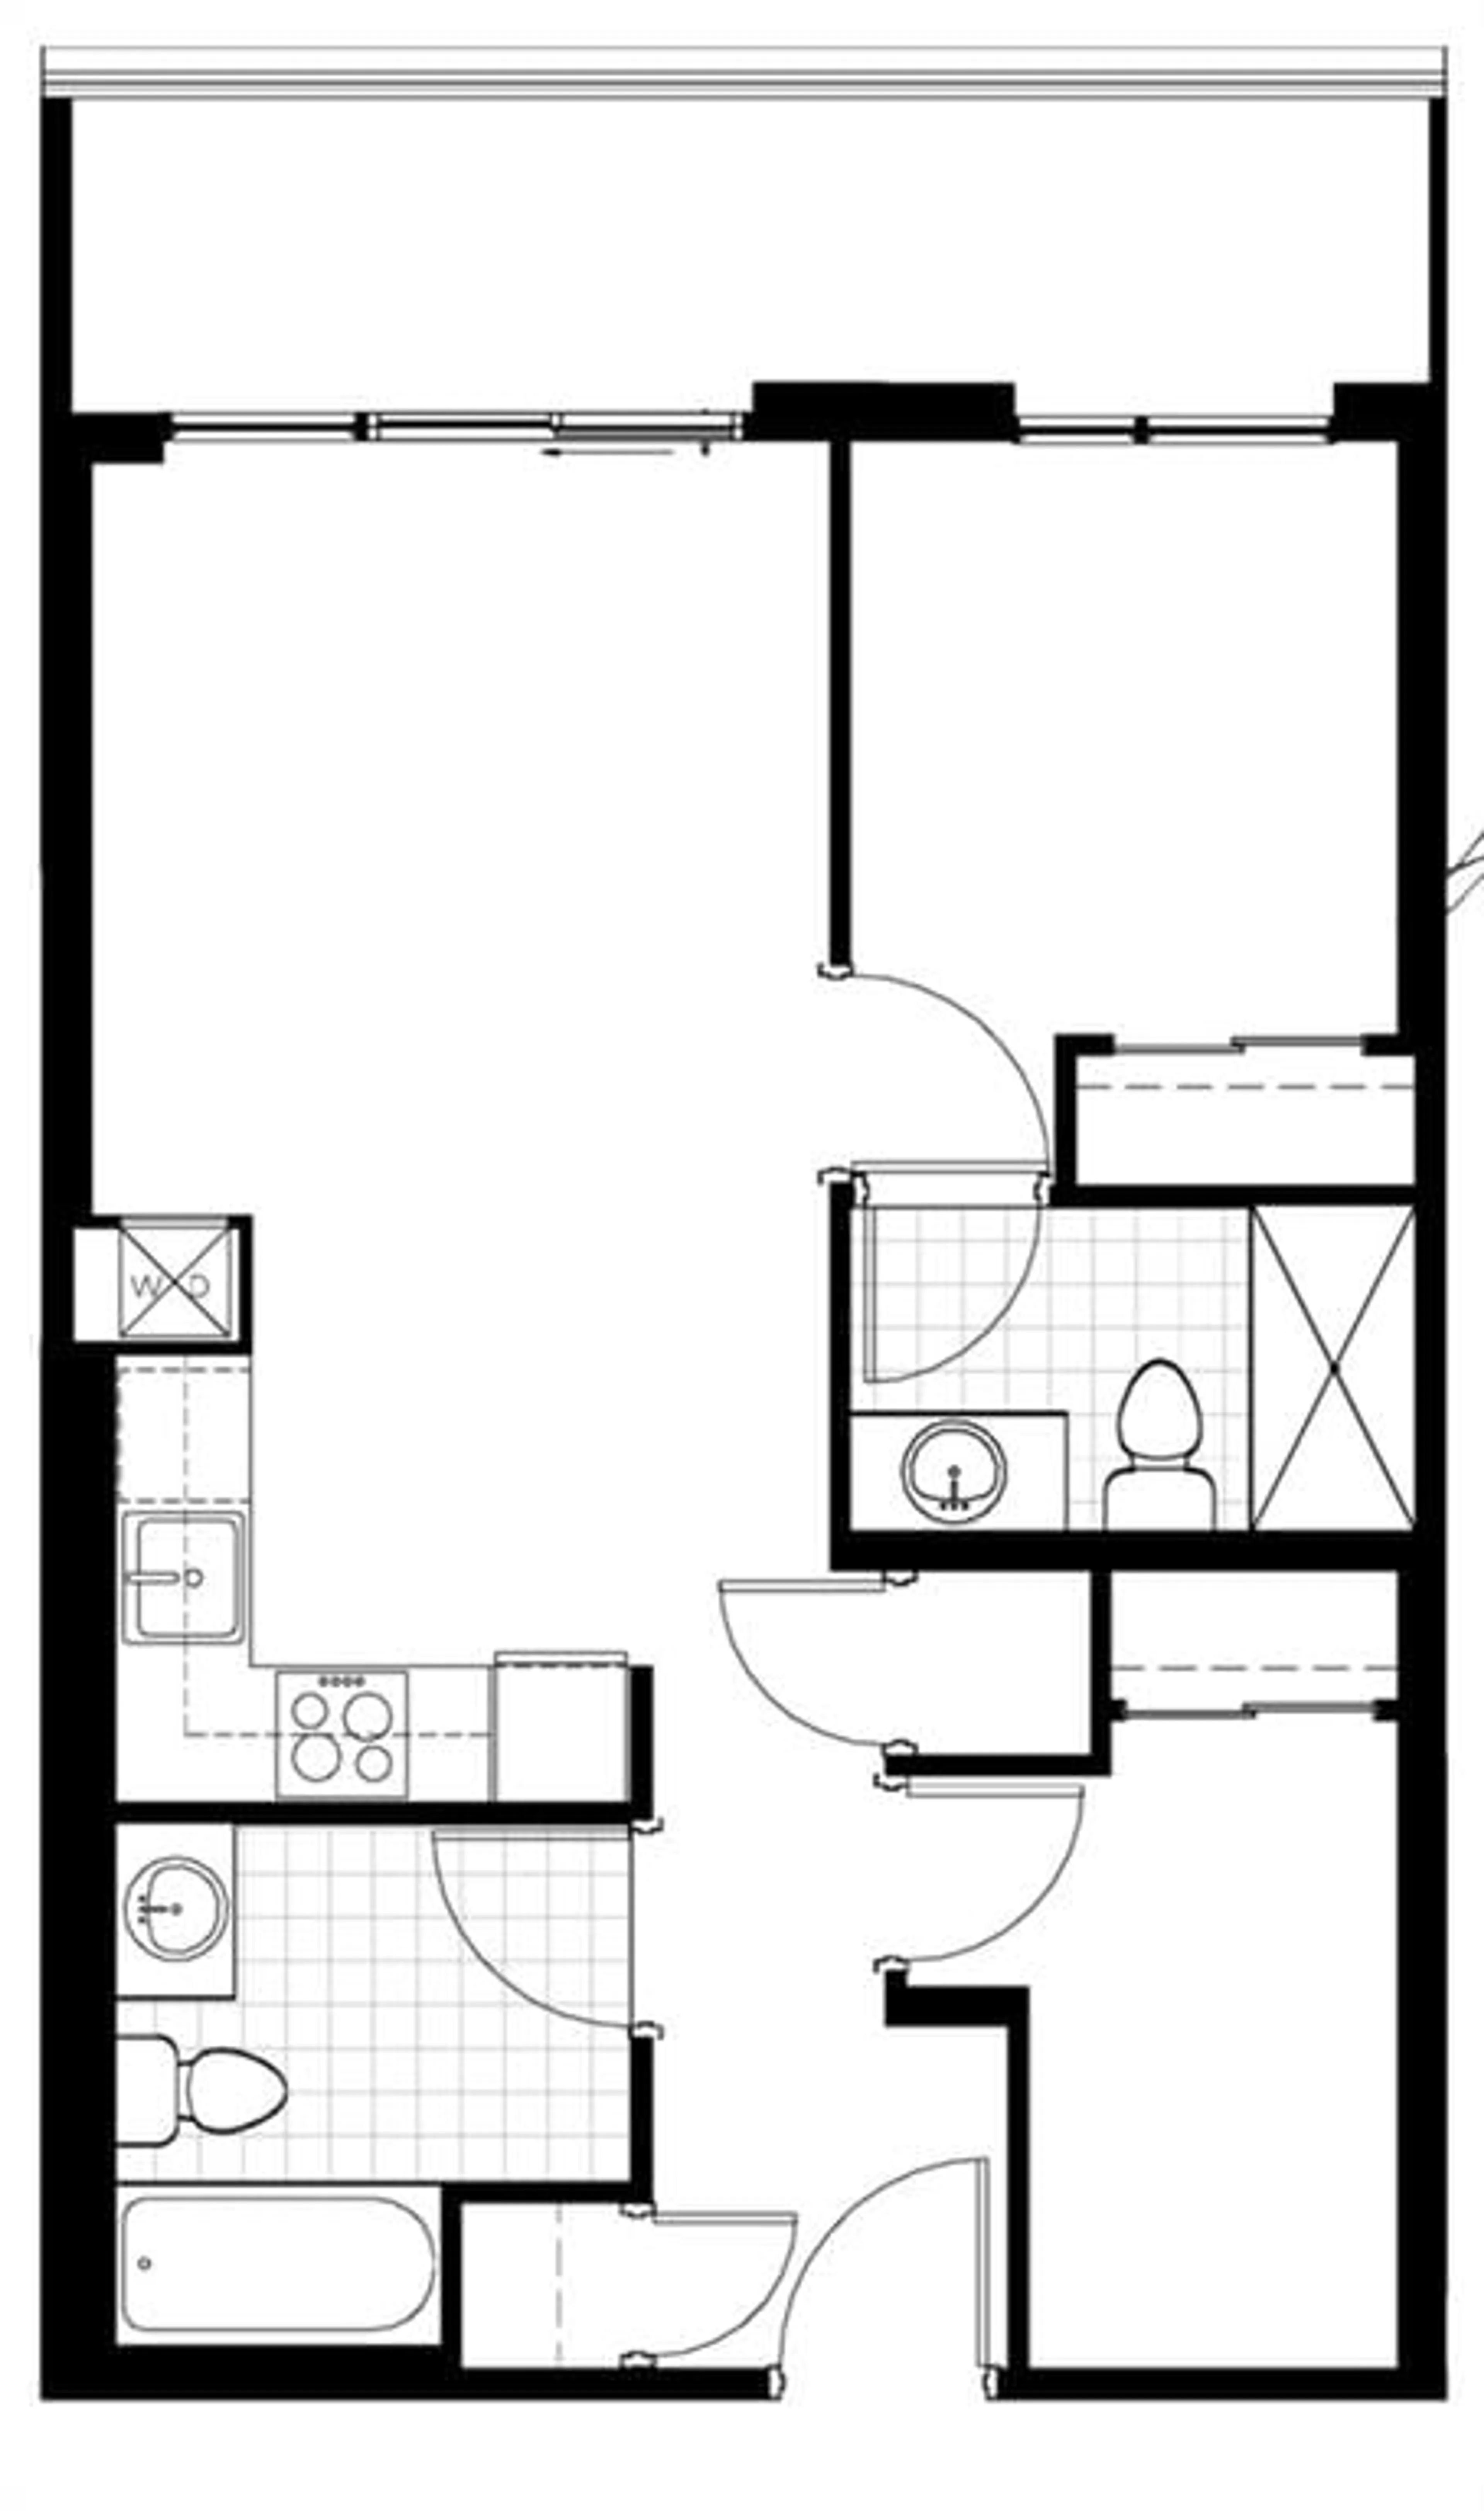 Floor plan for 401 SHELLARD Lane #228, Brantford Ontario N3T 5L5